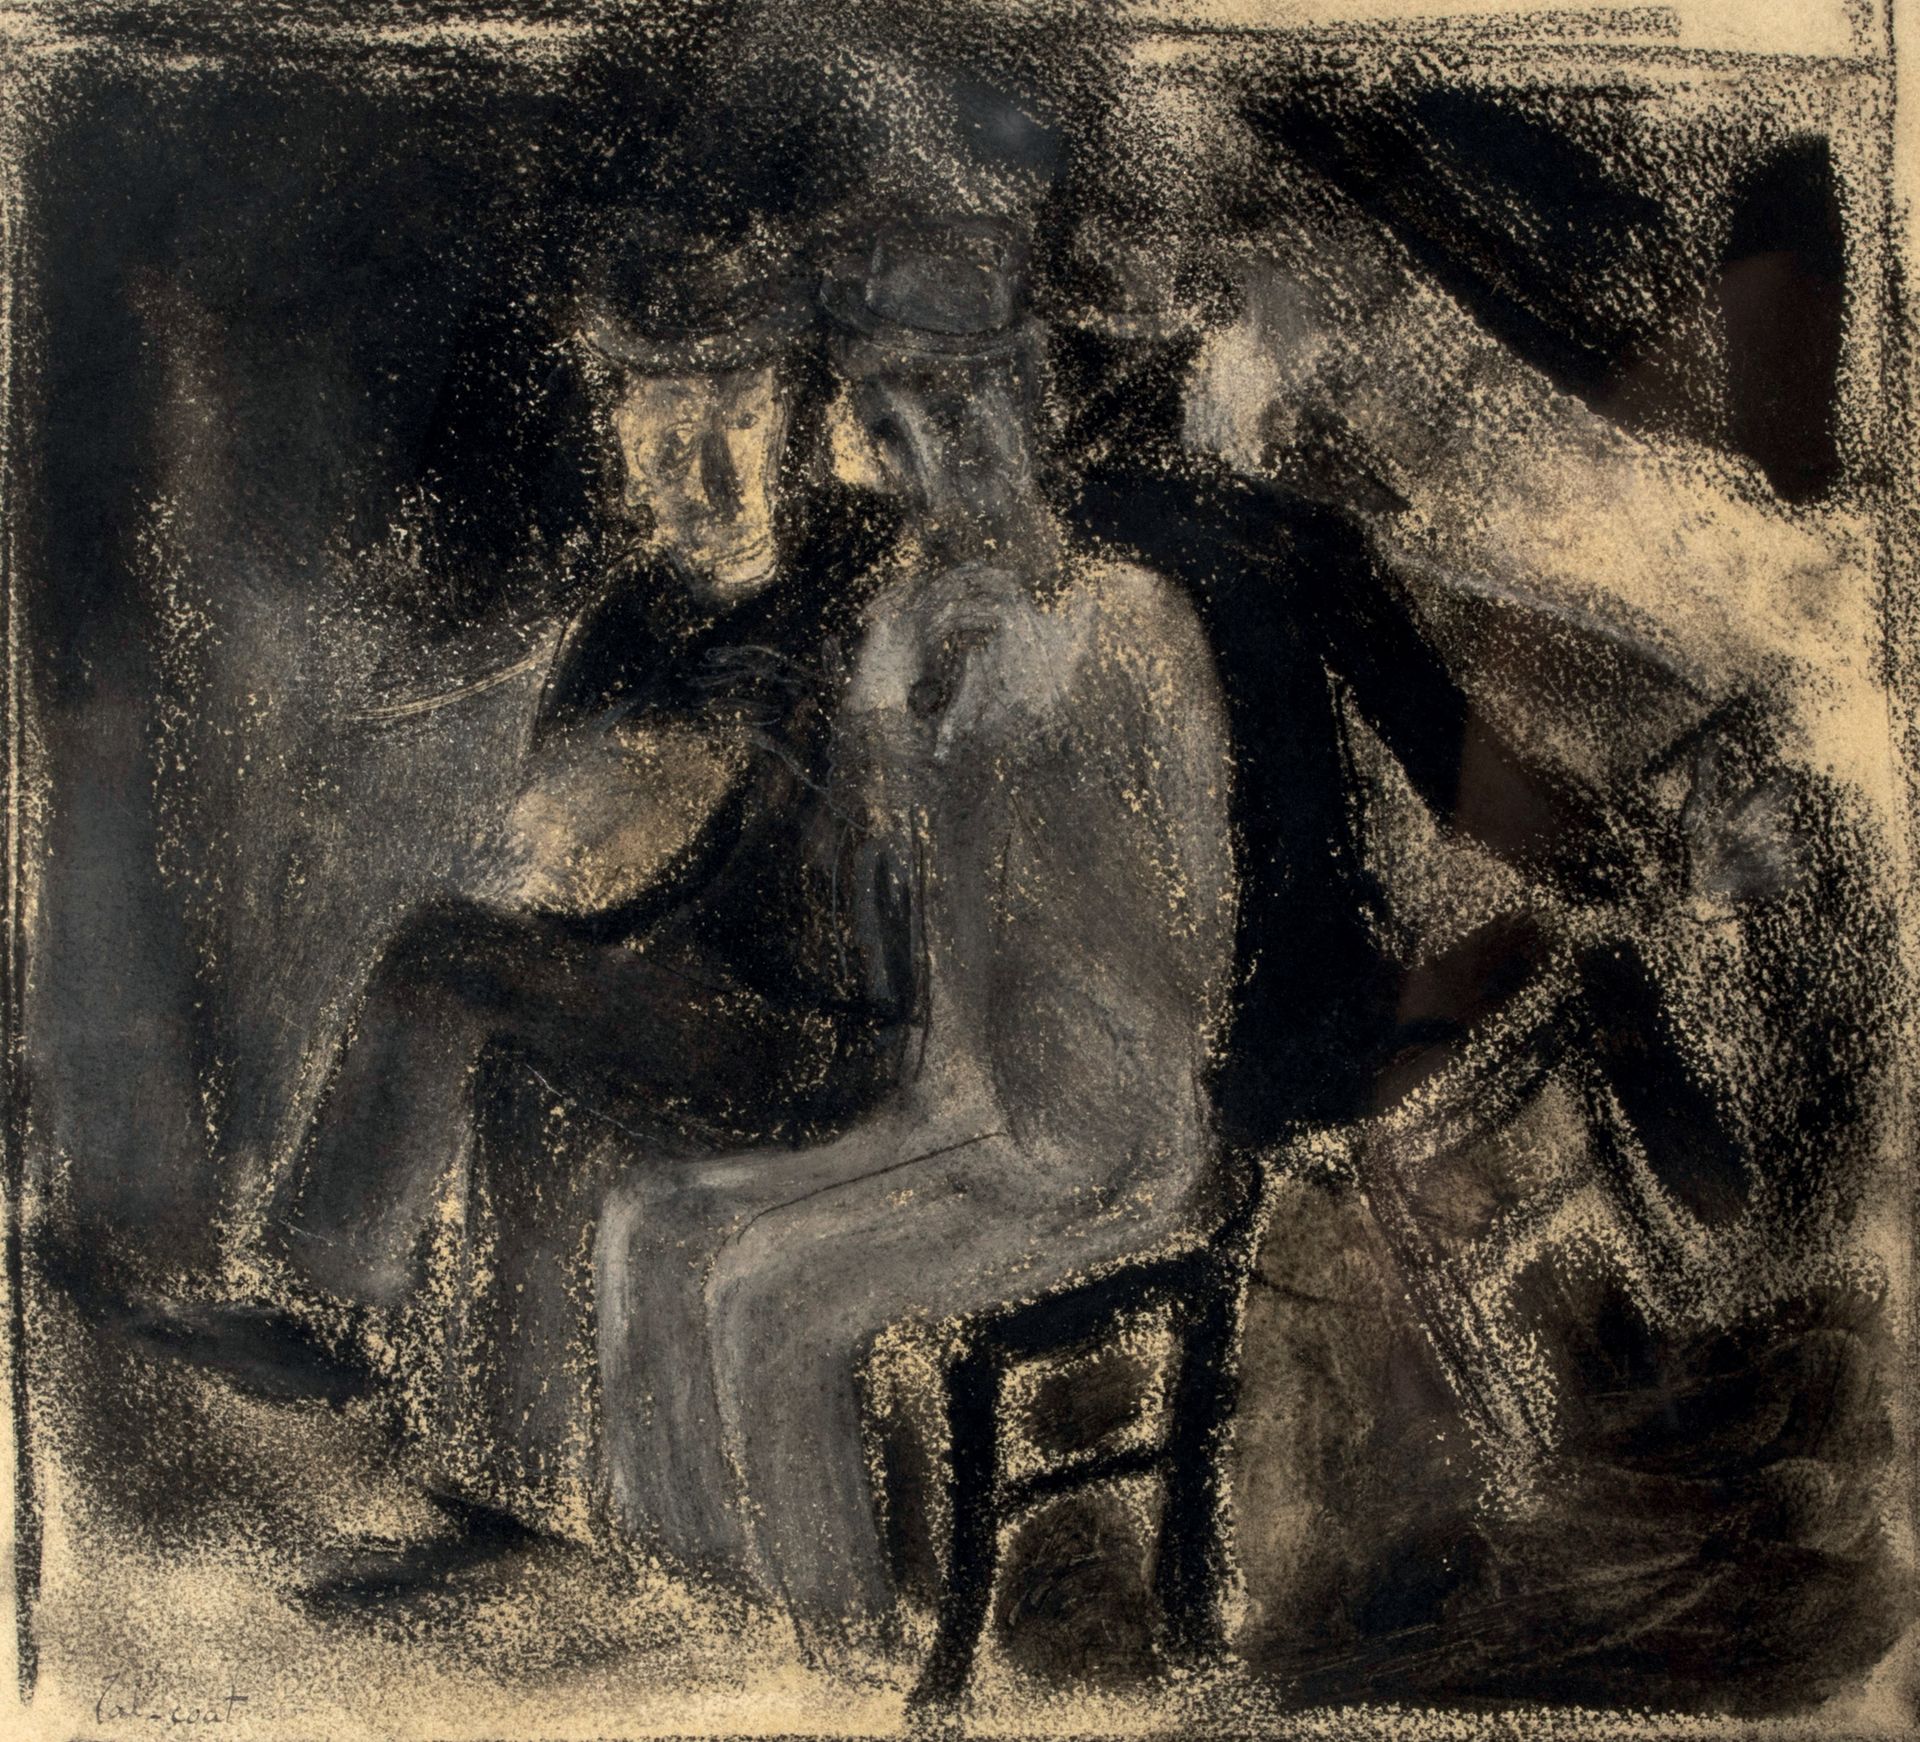 PIERRE TAL COAT (1905-1985) 坐着的人物，约1927年
纸上炭笔和水粉，左下角有签名，有框架 27 x 29 cm